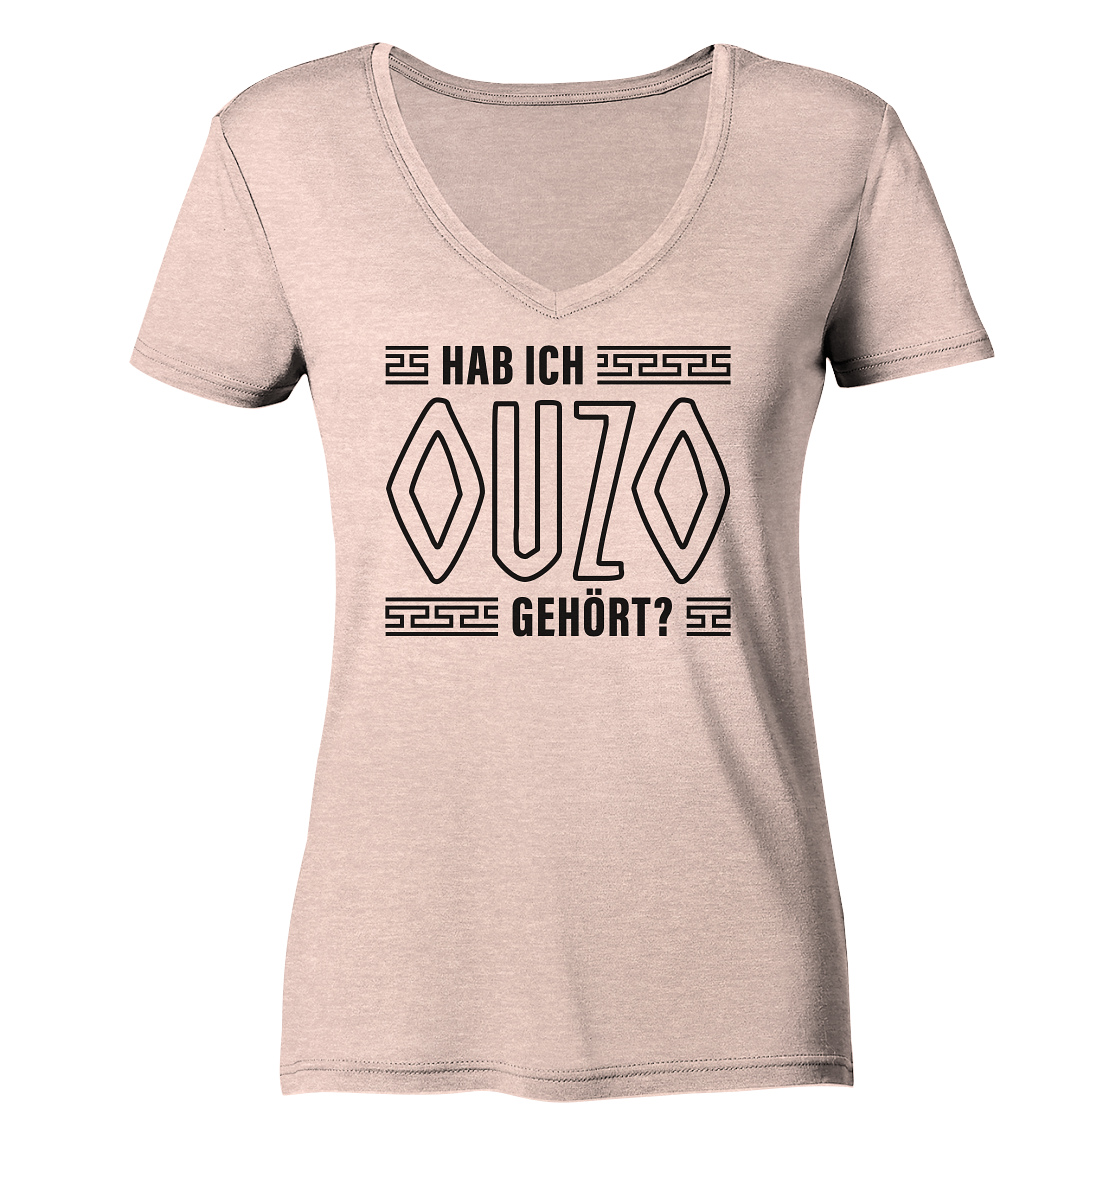 Have I heard ouzo? - Ladies Organic V-Neck Shirt